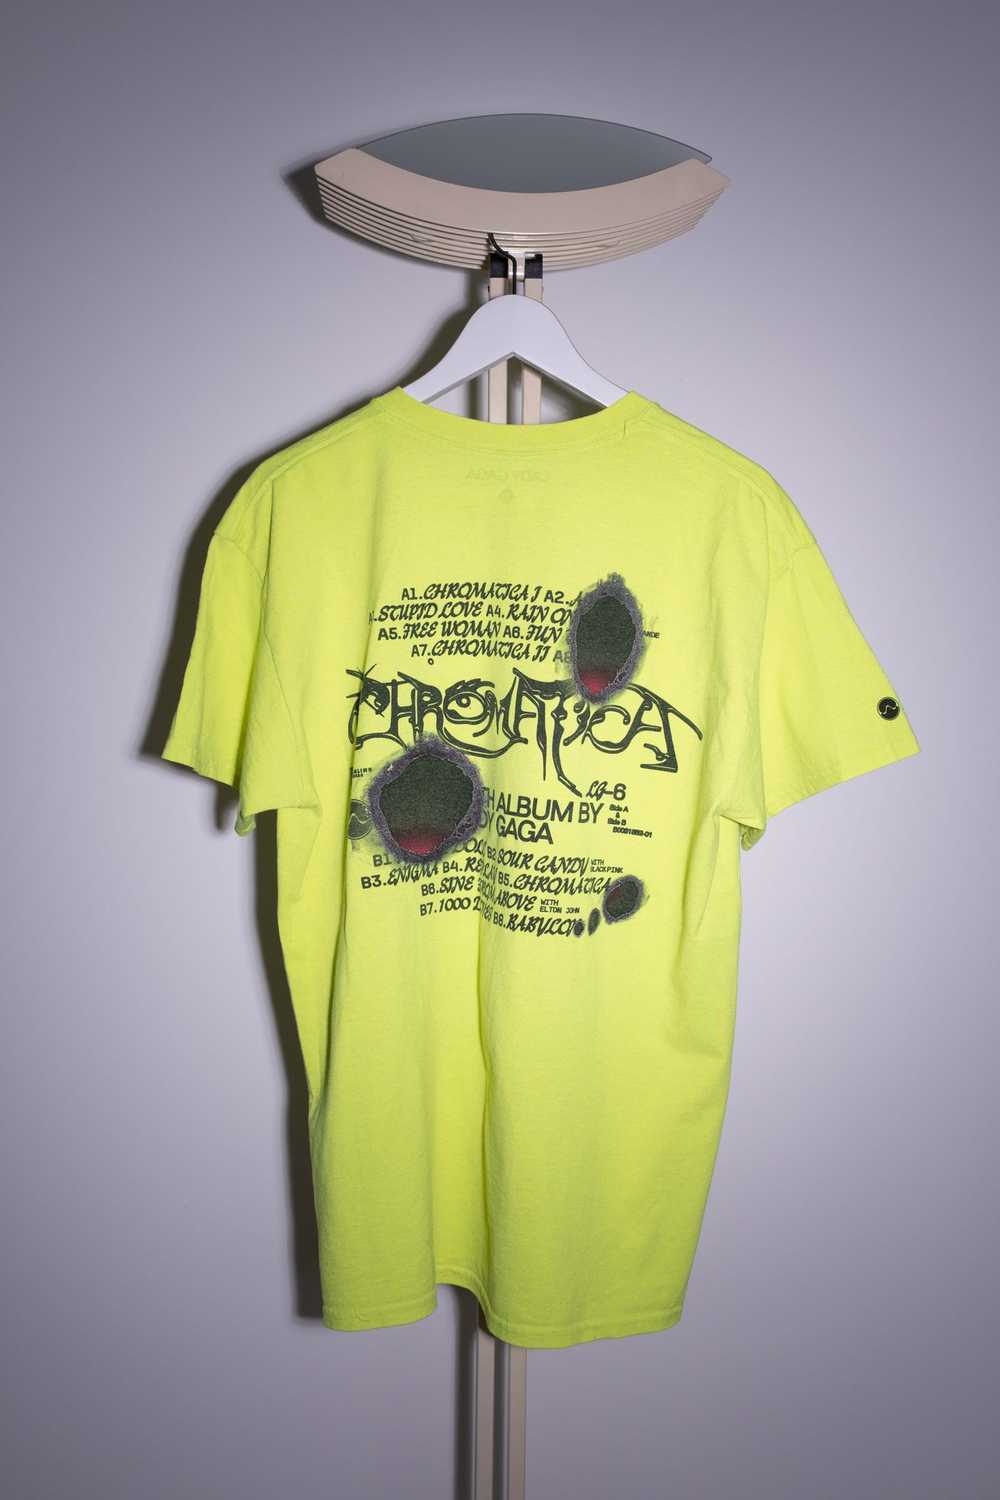 Band Tees Lady Gaga Chromatica Tour T-shirt - image 2